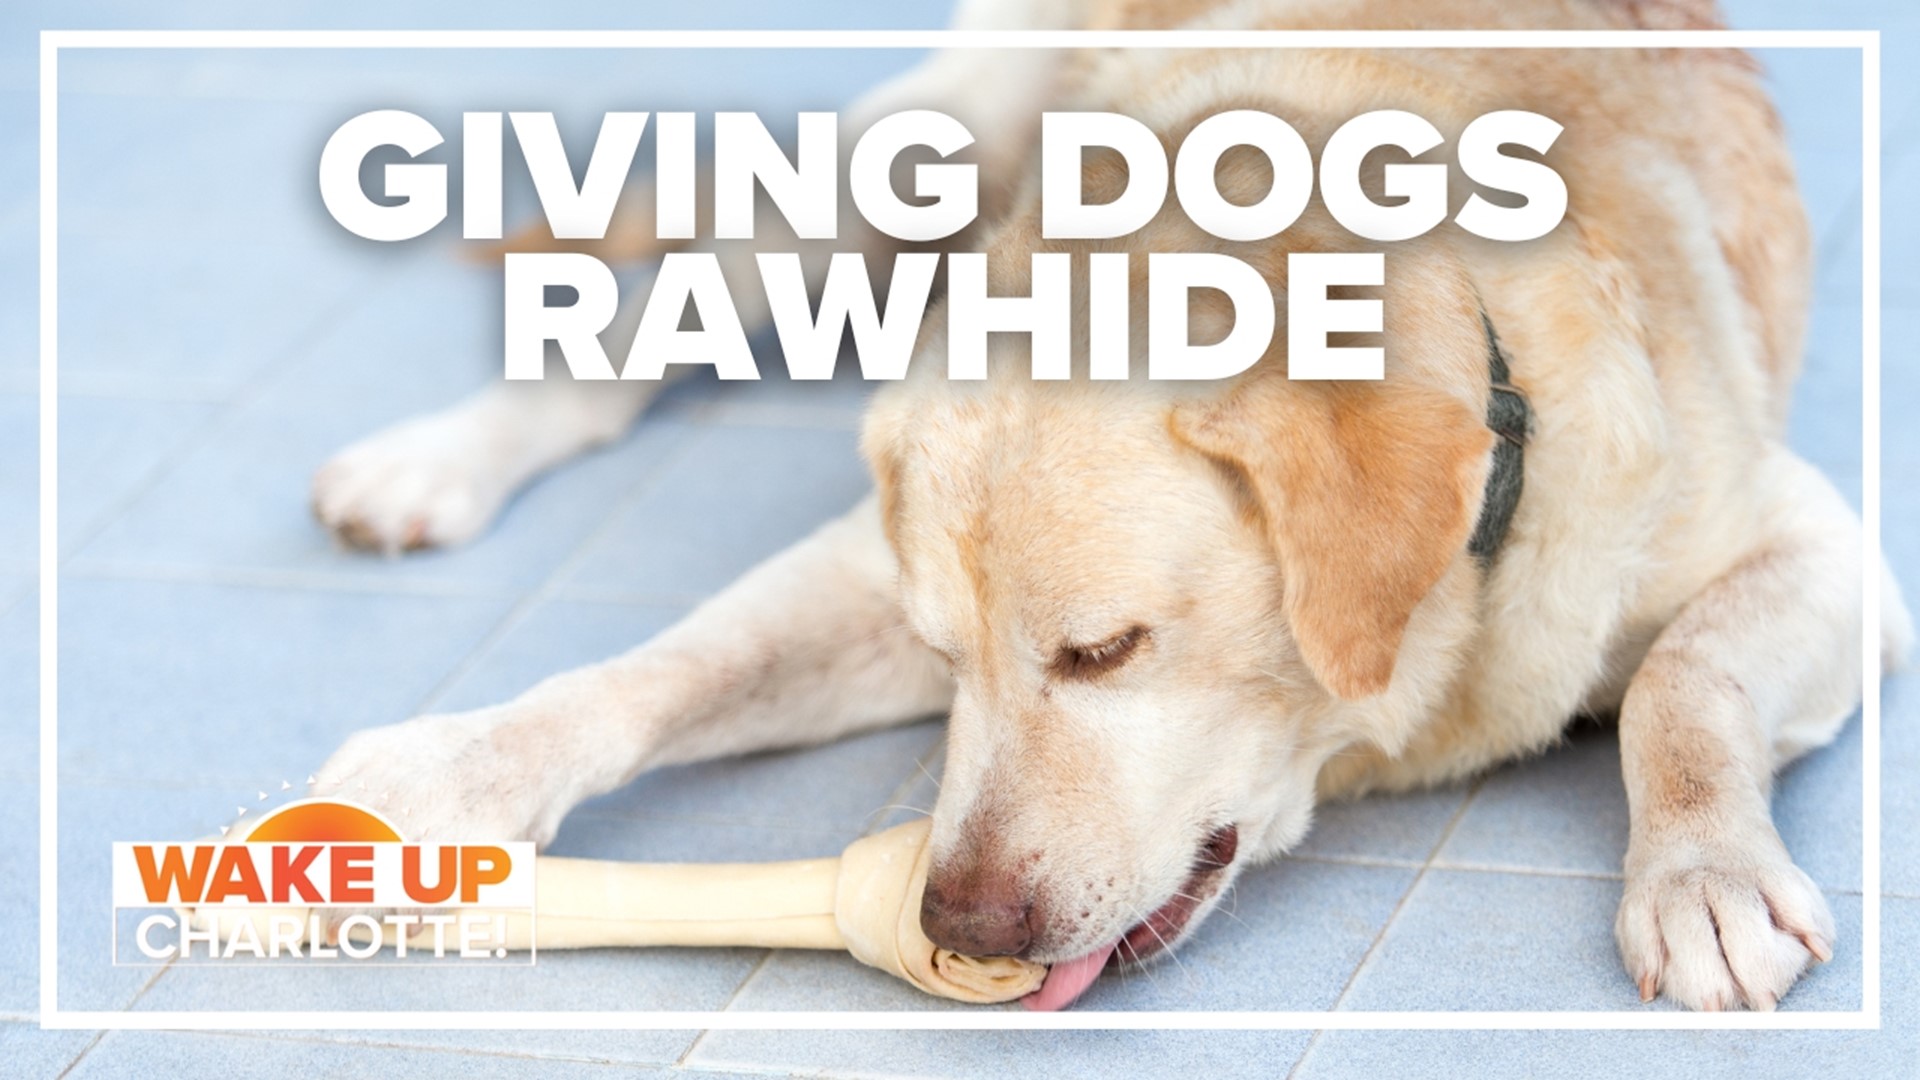 are rawhide dog treats safe